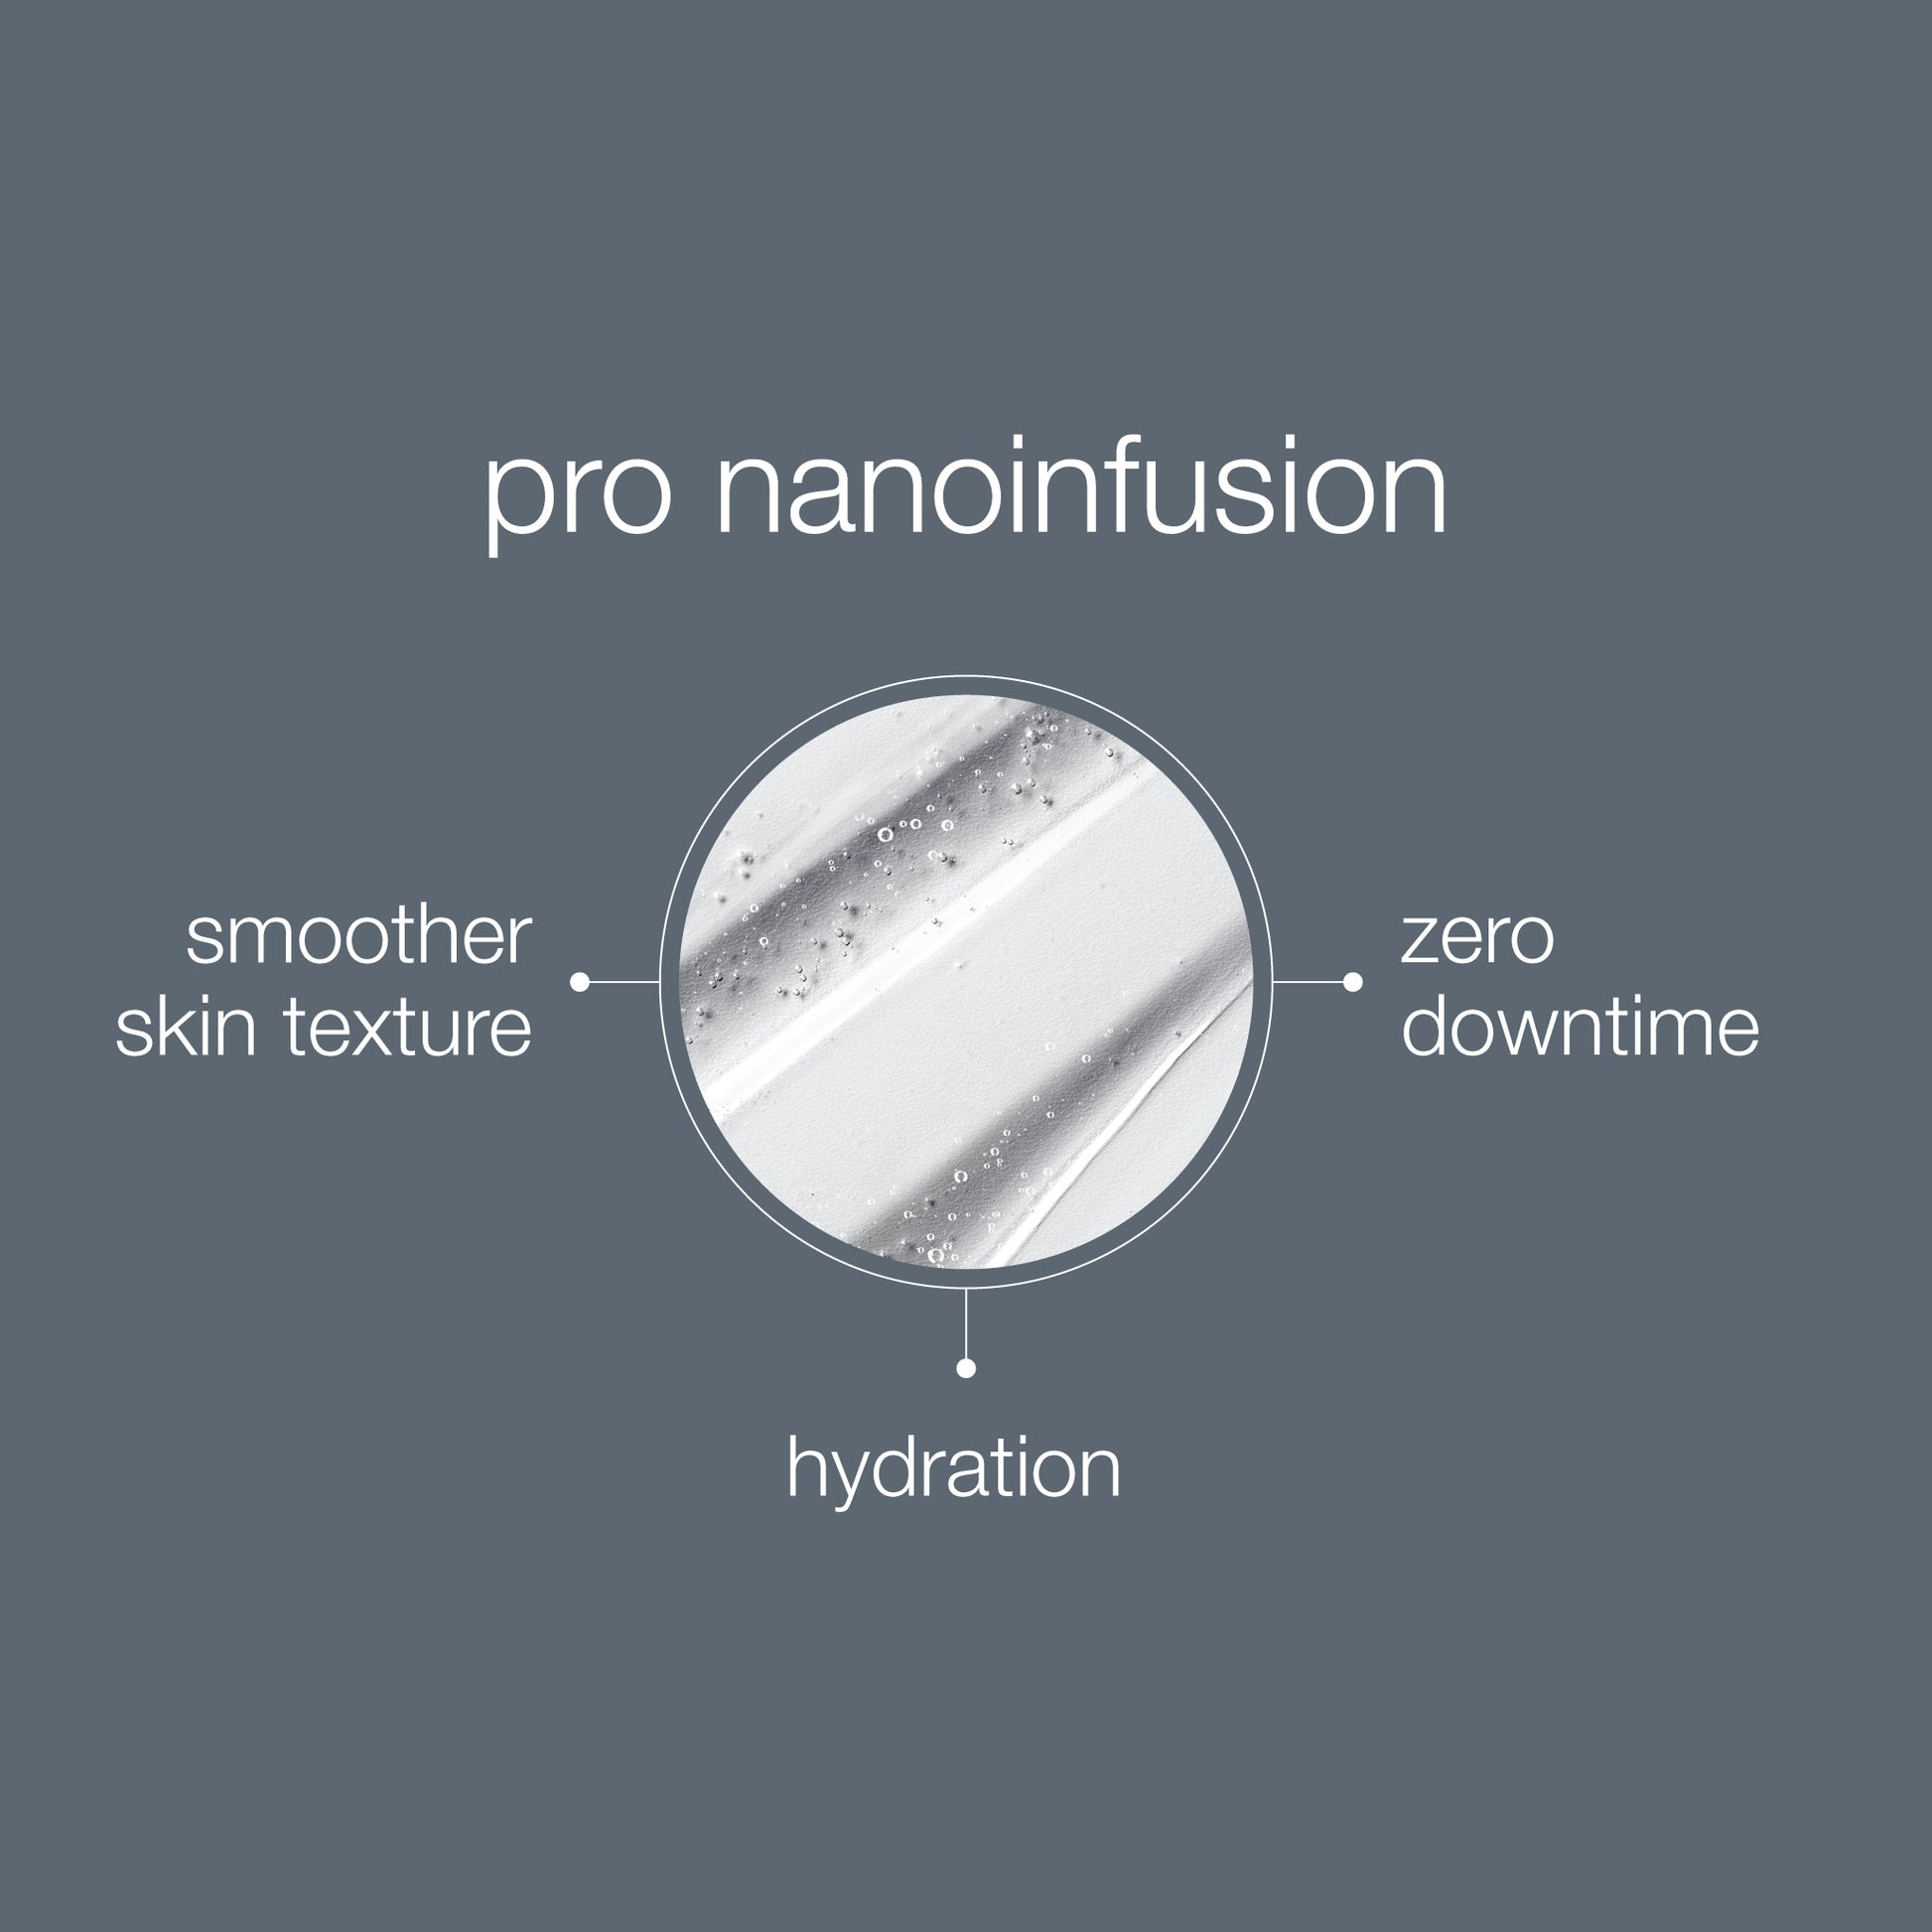 pro nanoinfusion benefits